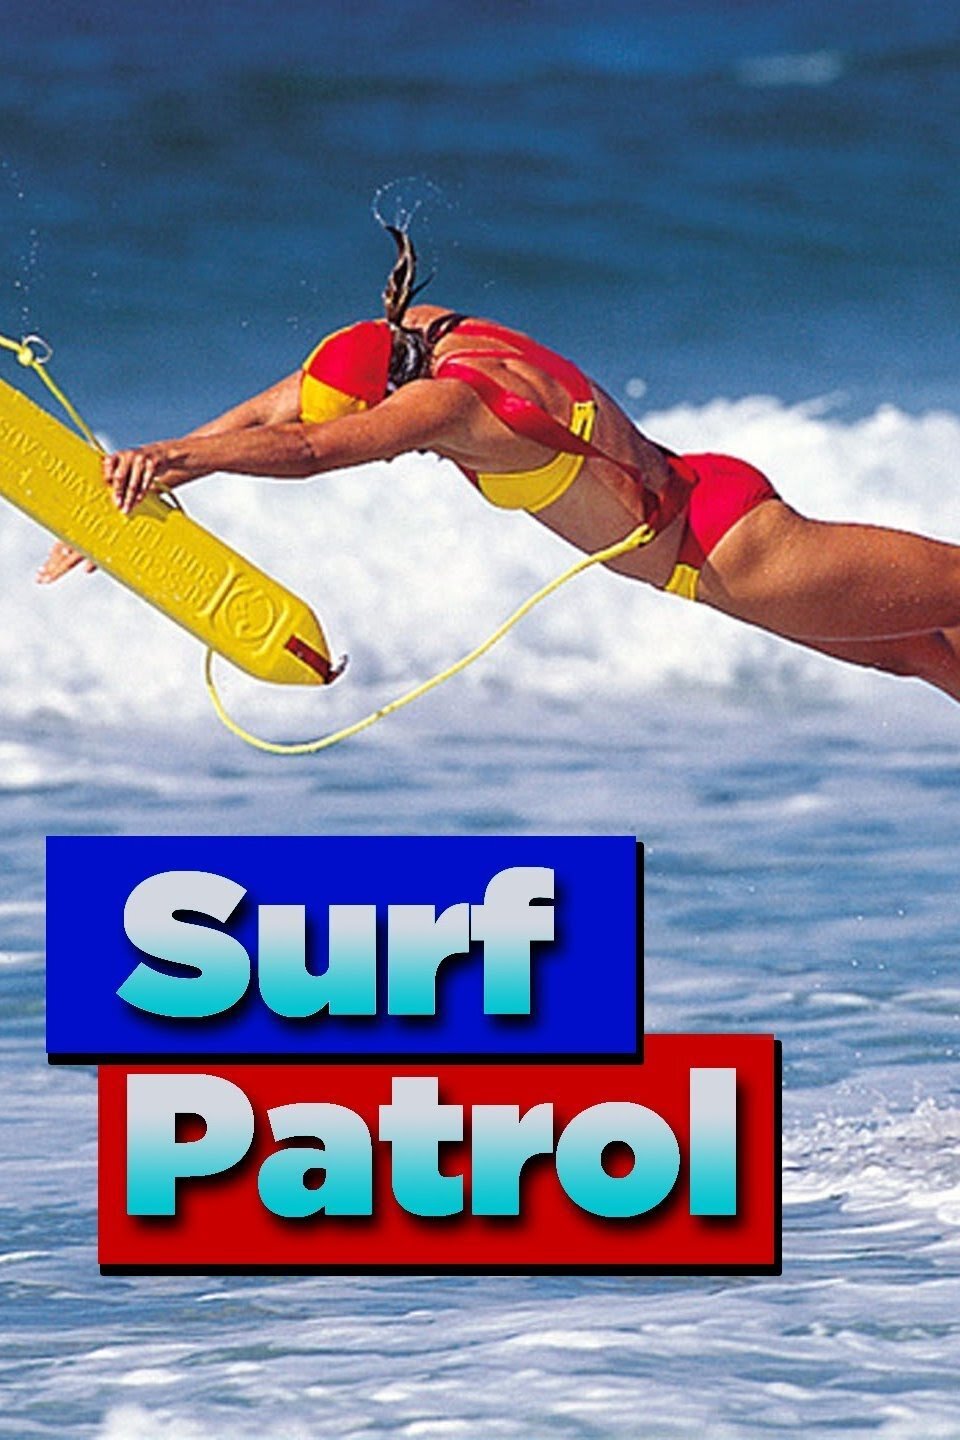 Surf Patrol.jpg